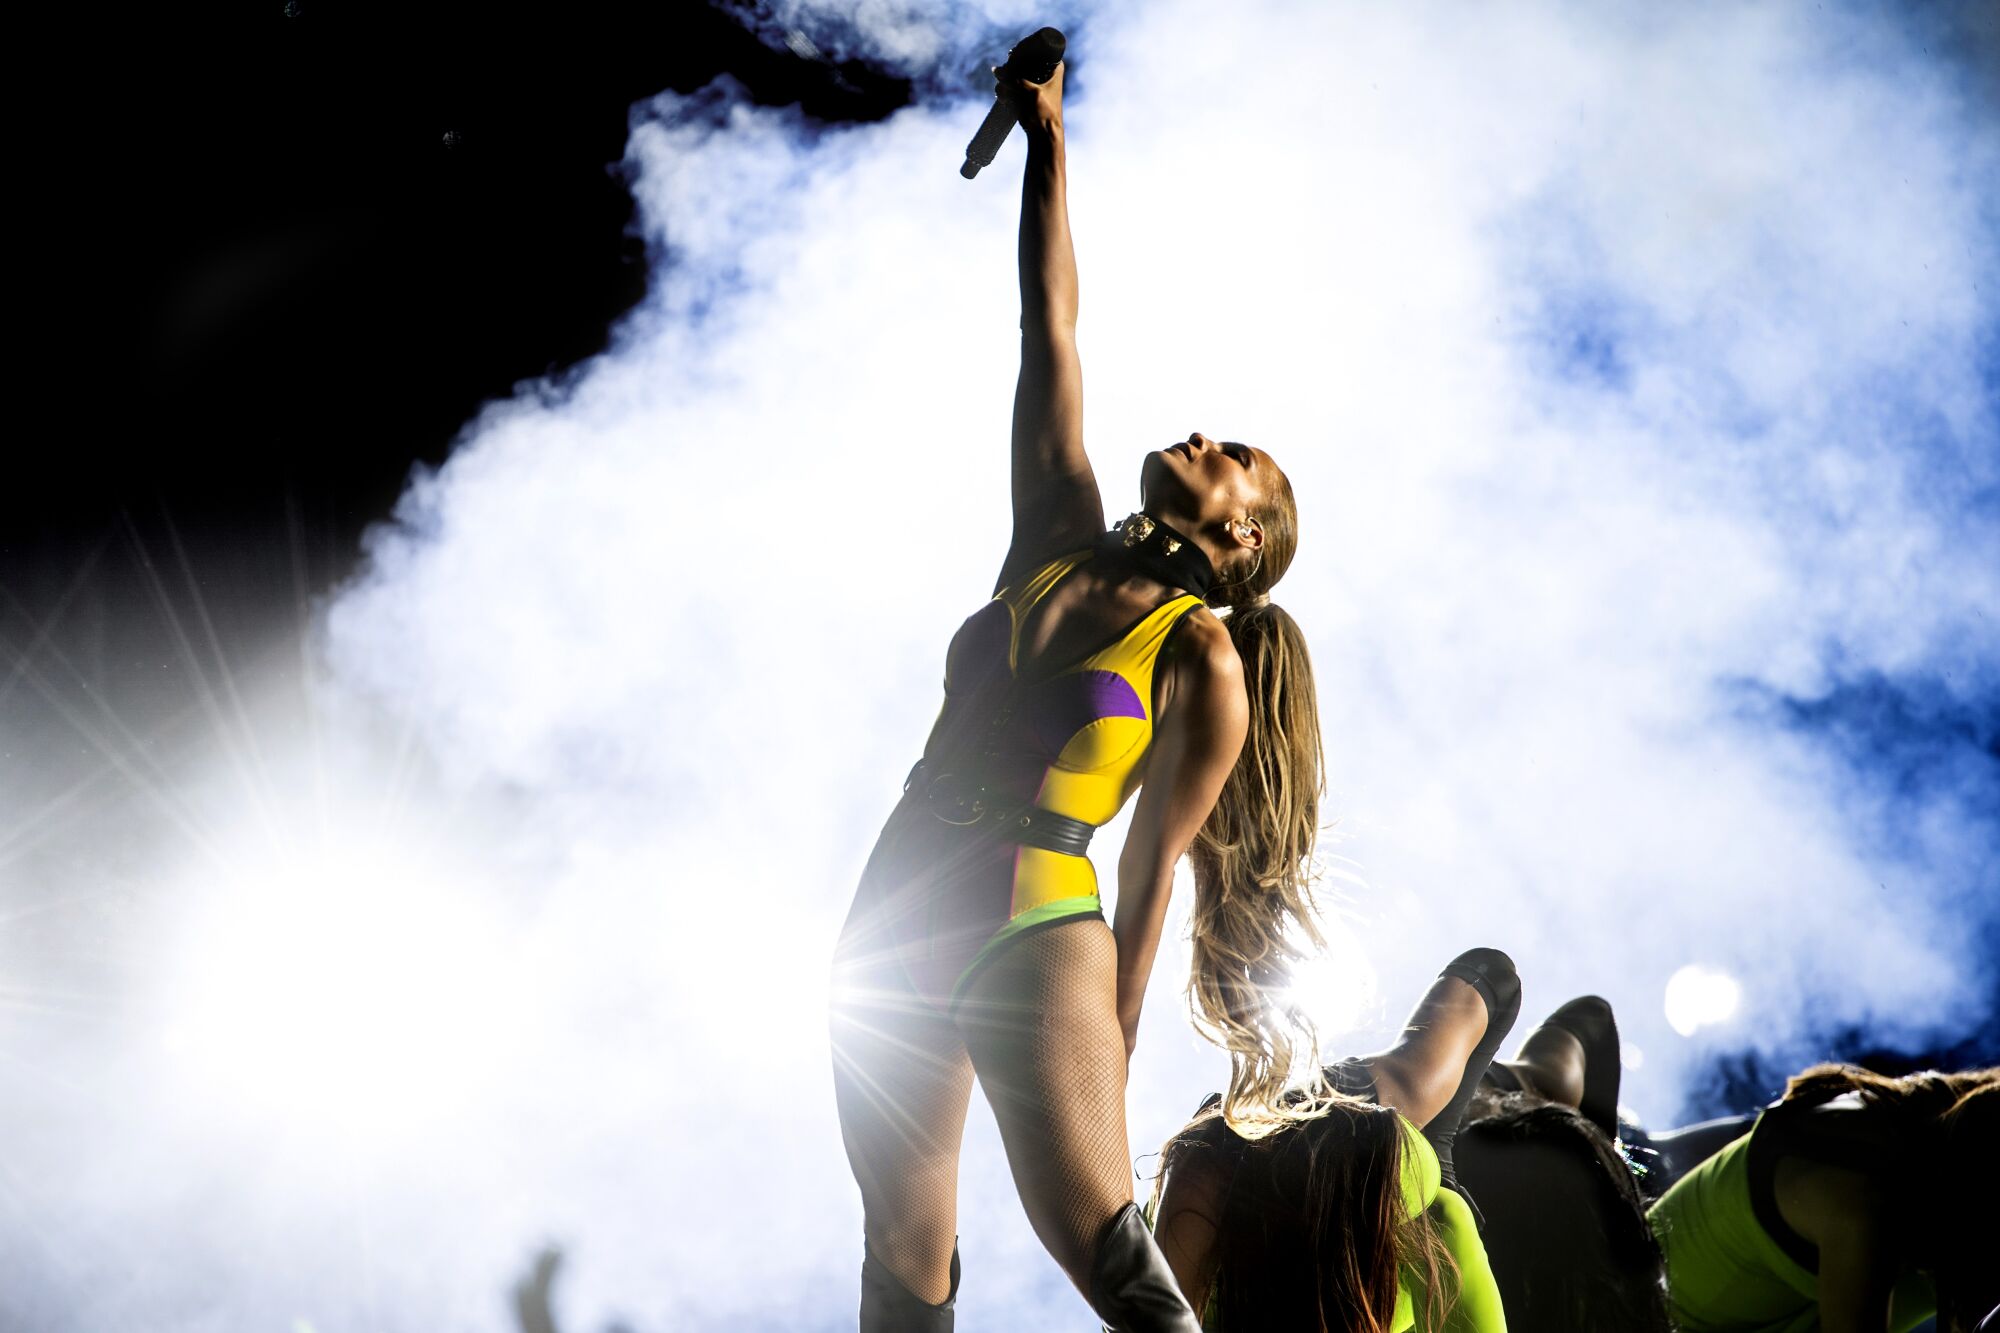 Jennifer Lopez raises her arm during the Vax Live concert at SoFi Stadium